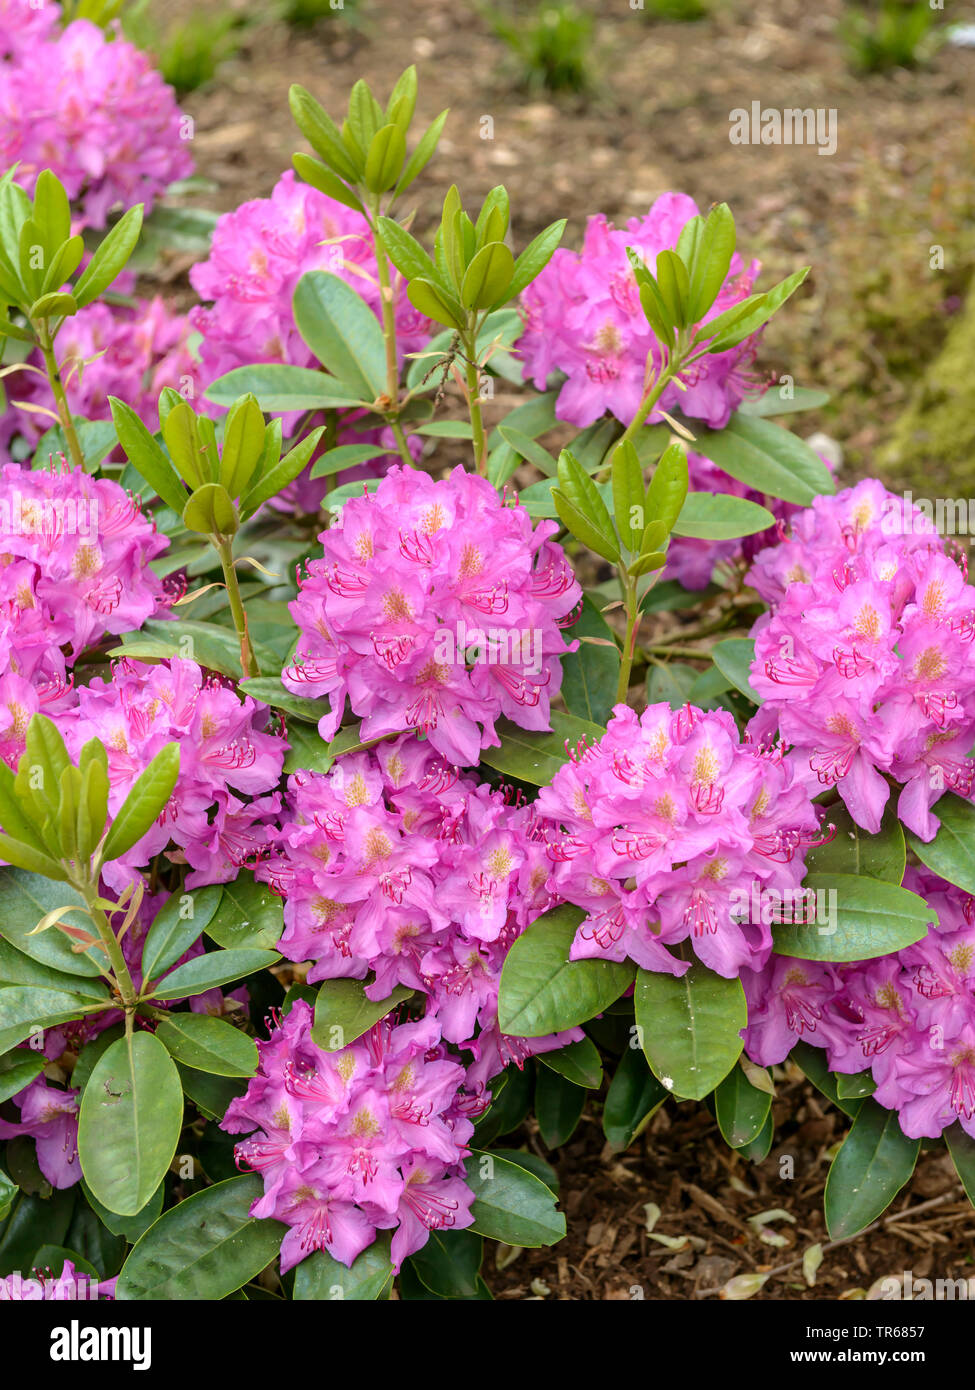 Rhododendron Catawba Catawba, Rose Bay (Rhododendron 'Rosa viola sogno", rododendro rosa sogno viola, Rhododendron catawbiense), fioritura, cultivar rosa sogno viola Foto Stock